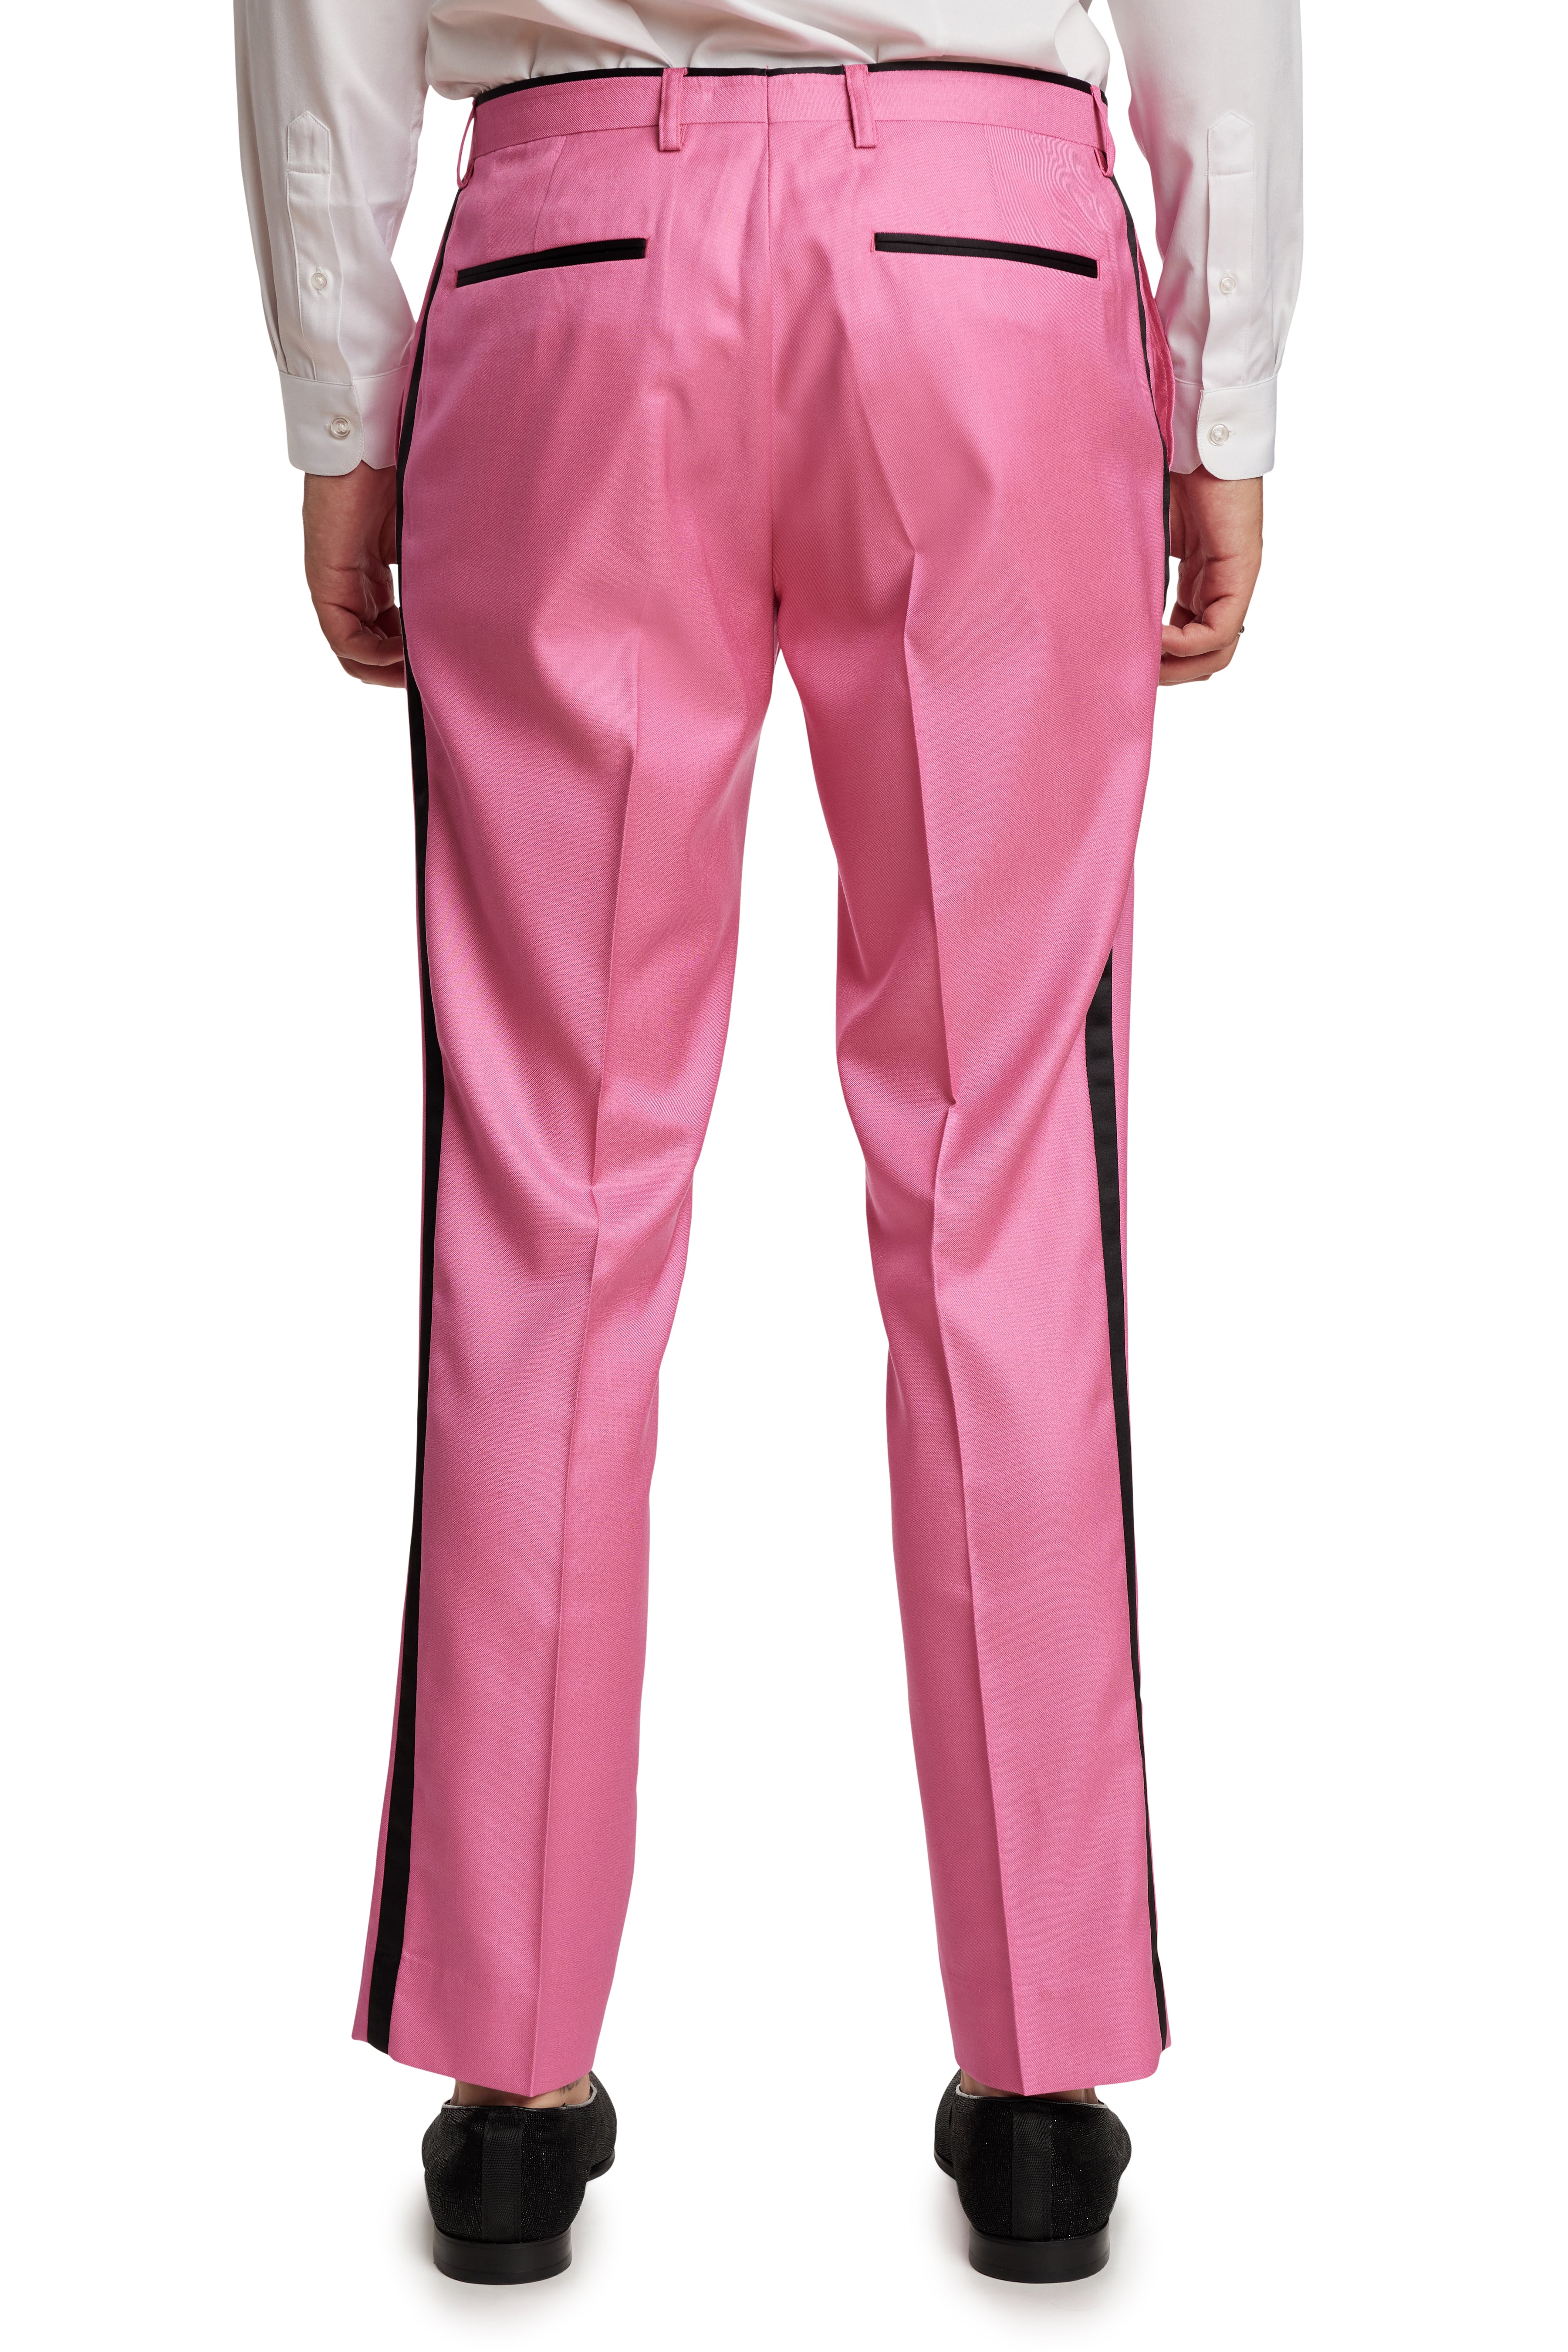 Sloane Tux Pants - slim - Hot Pink